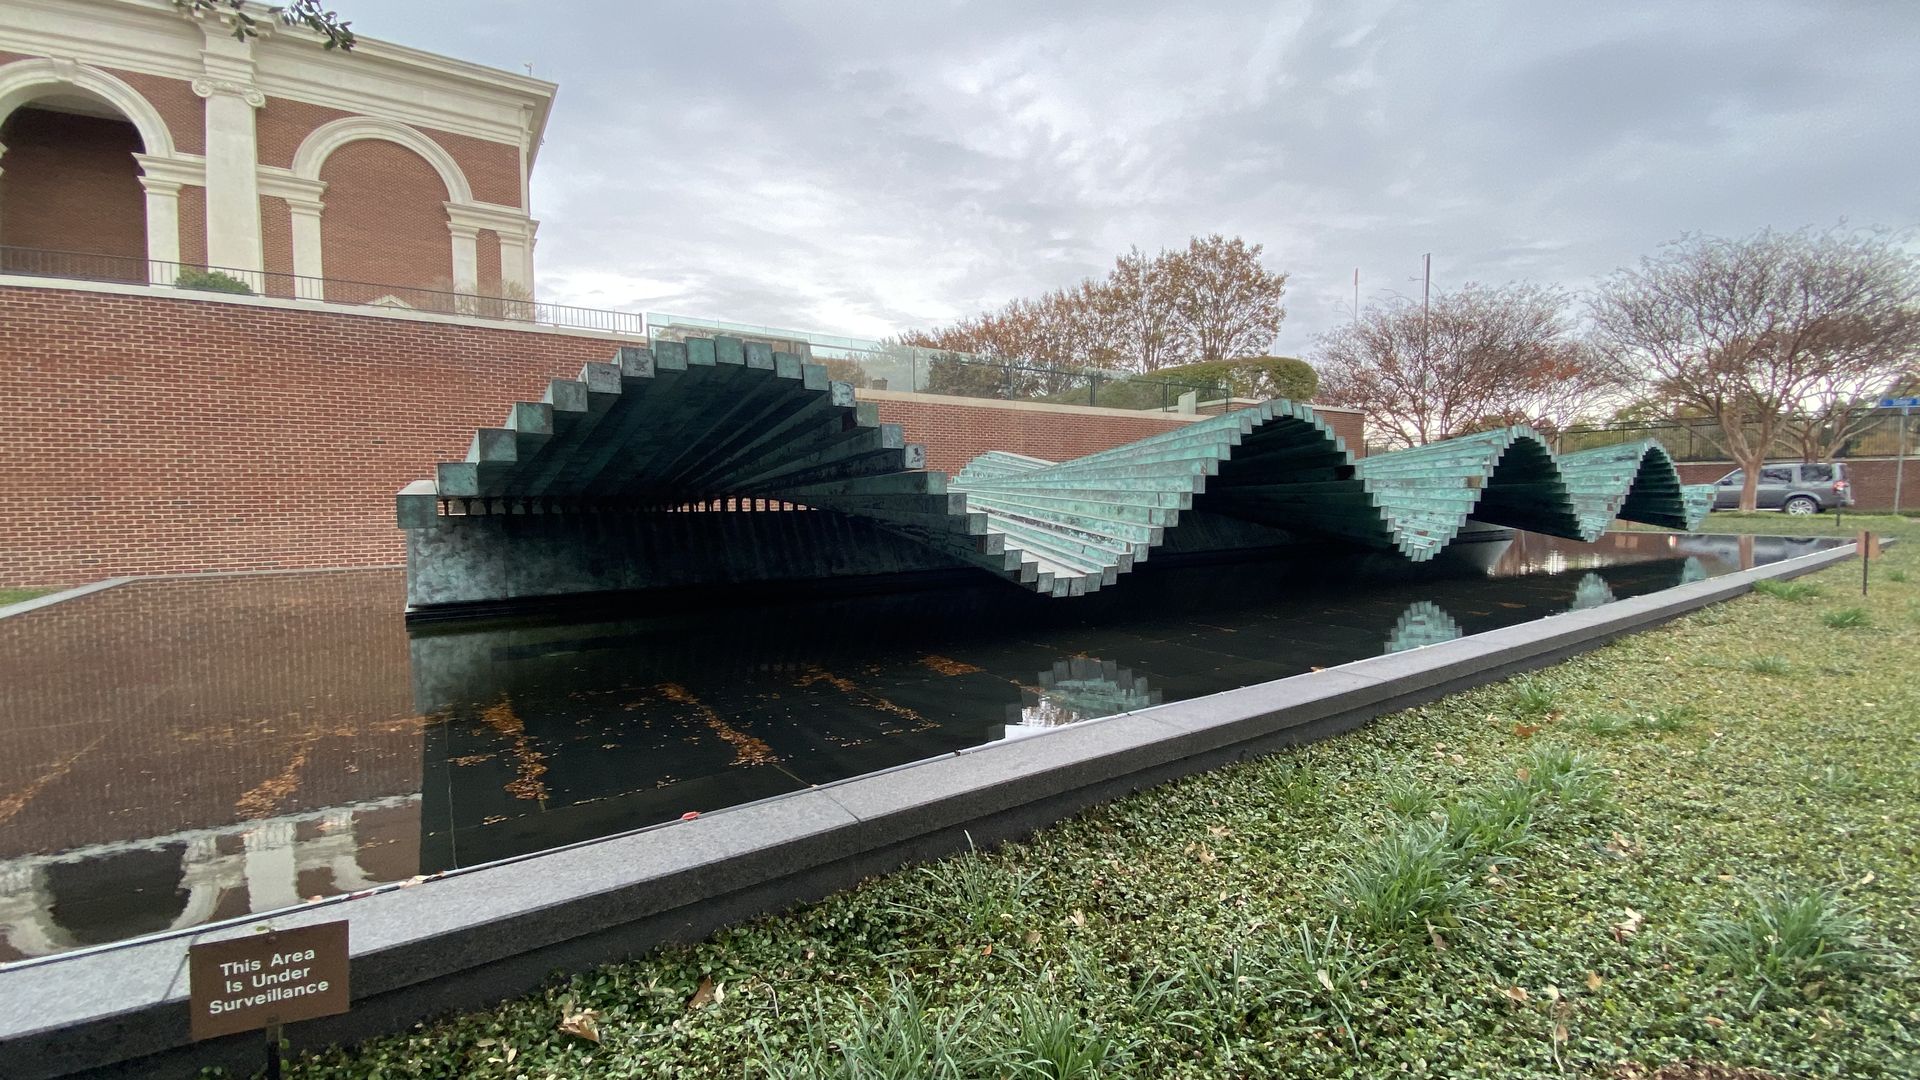 The "Wave" sculpture